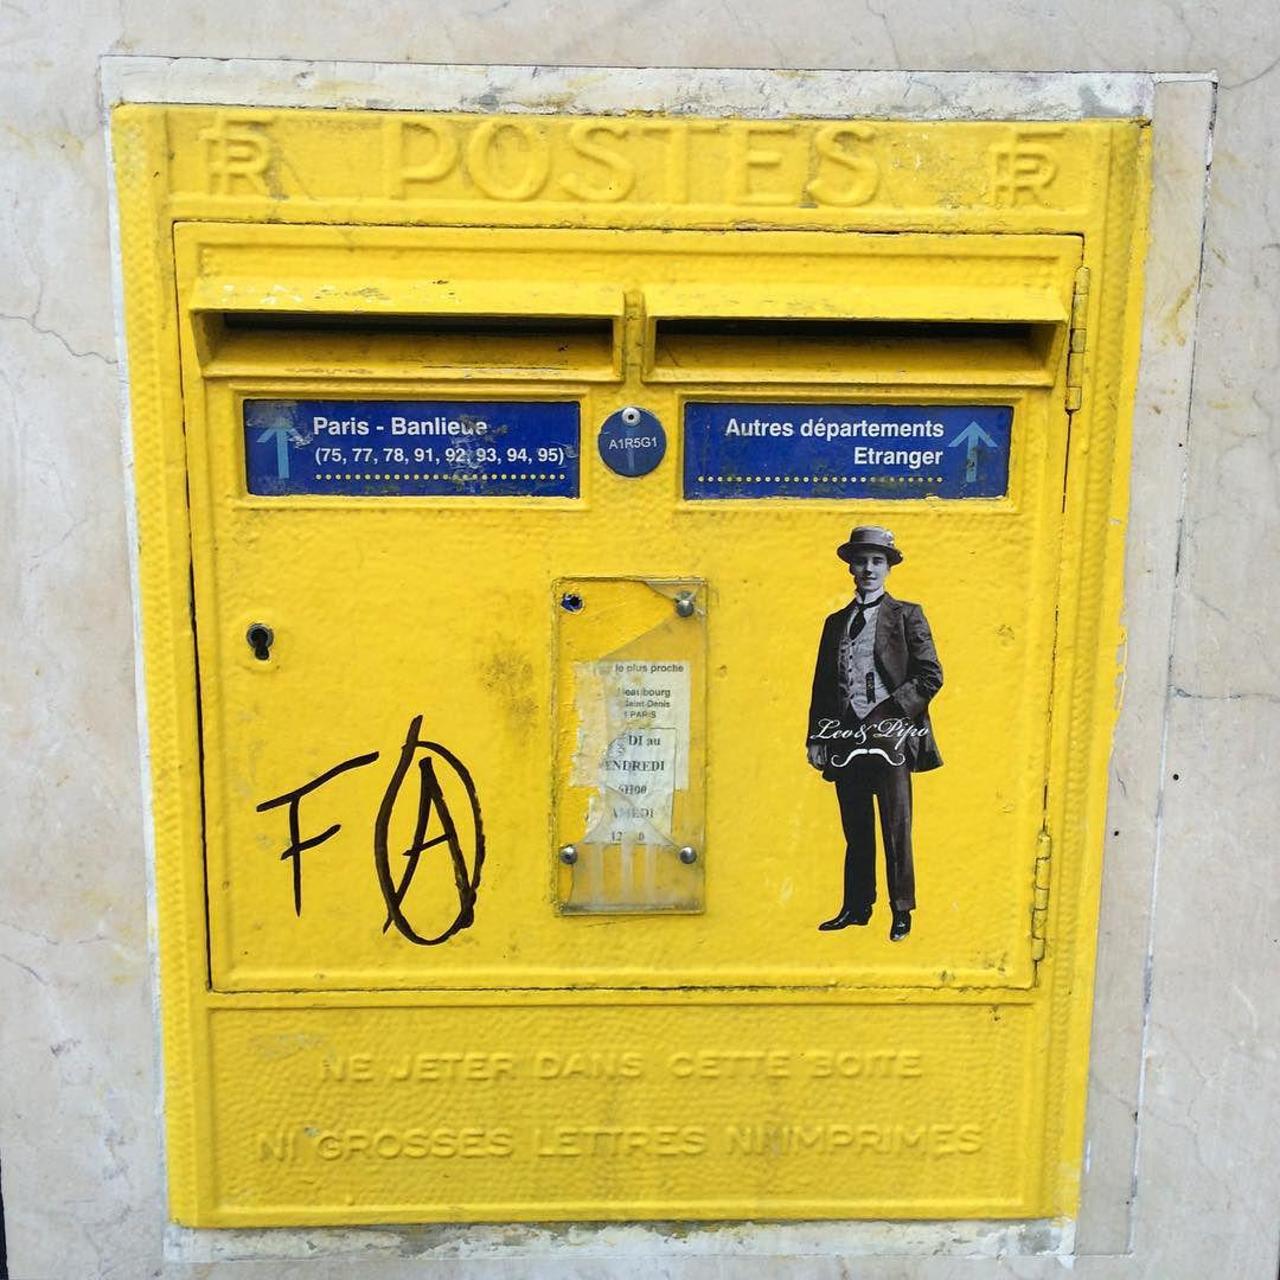 #Paris #graffiti photo by @benapix http://ift.tt/1LzrnLR #StreetArt http://t.co/2JyKYcD1WI